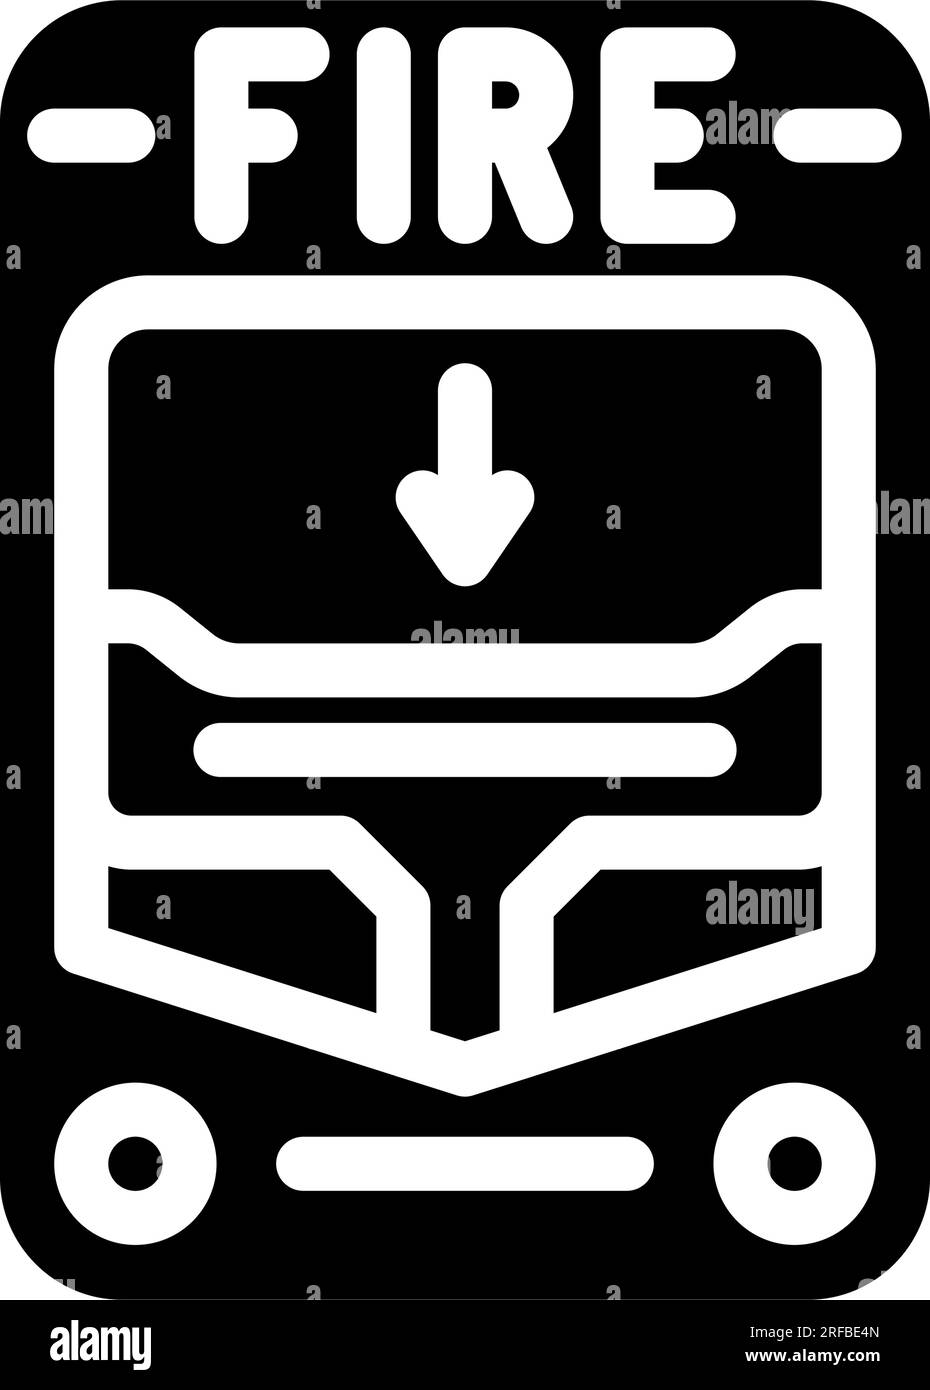 fire alarm alert glyph icon vector illustration Stock Vector